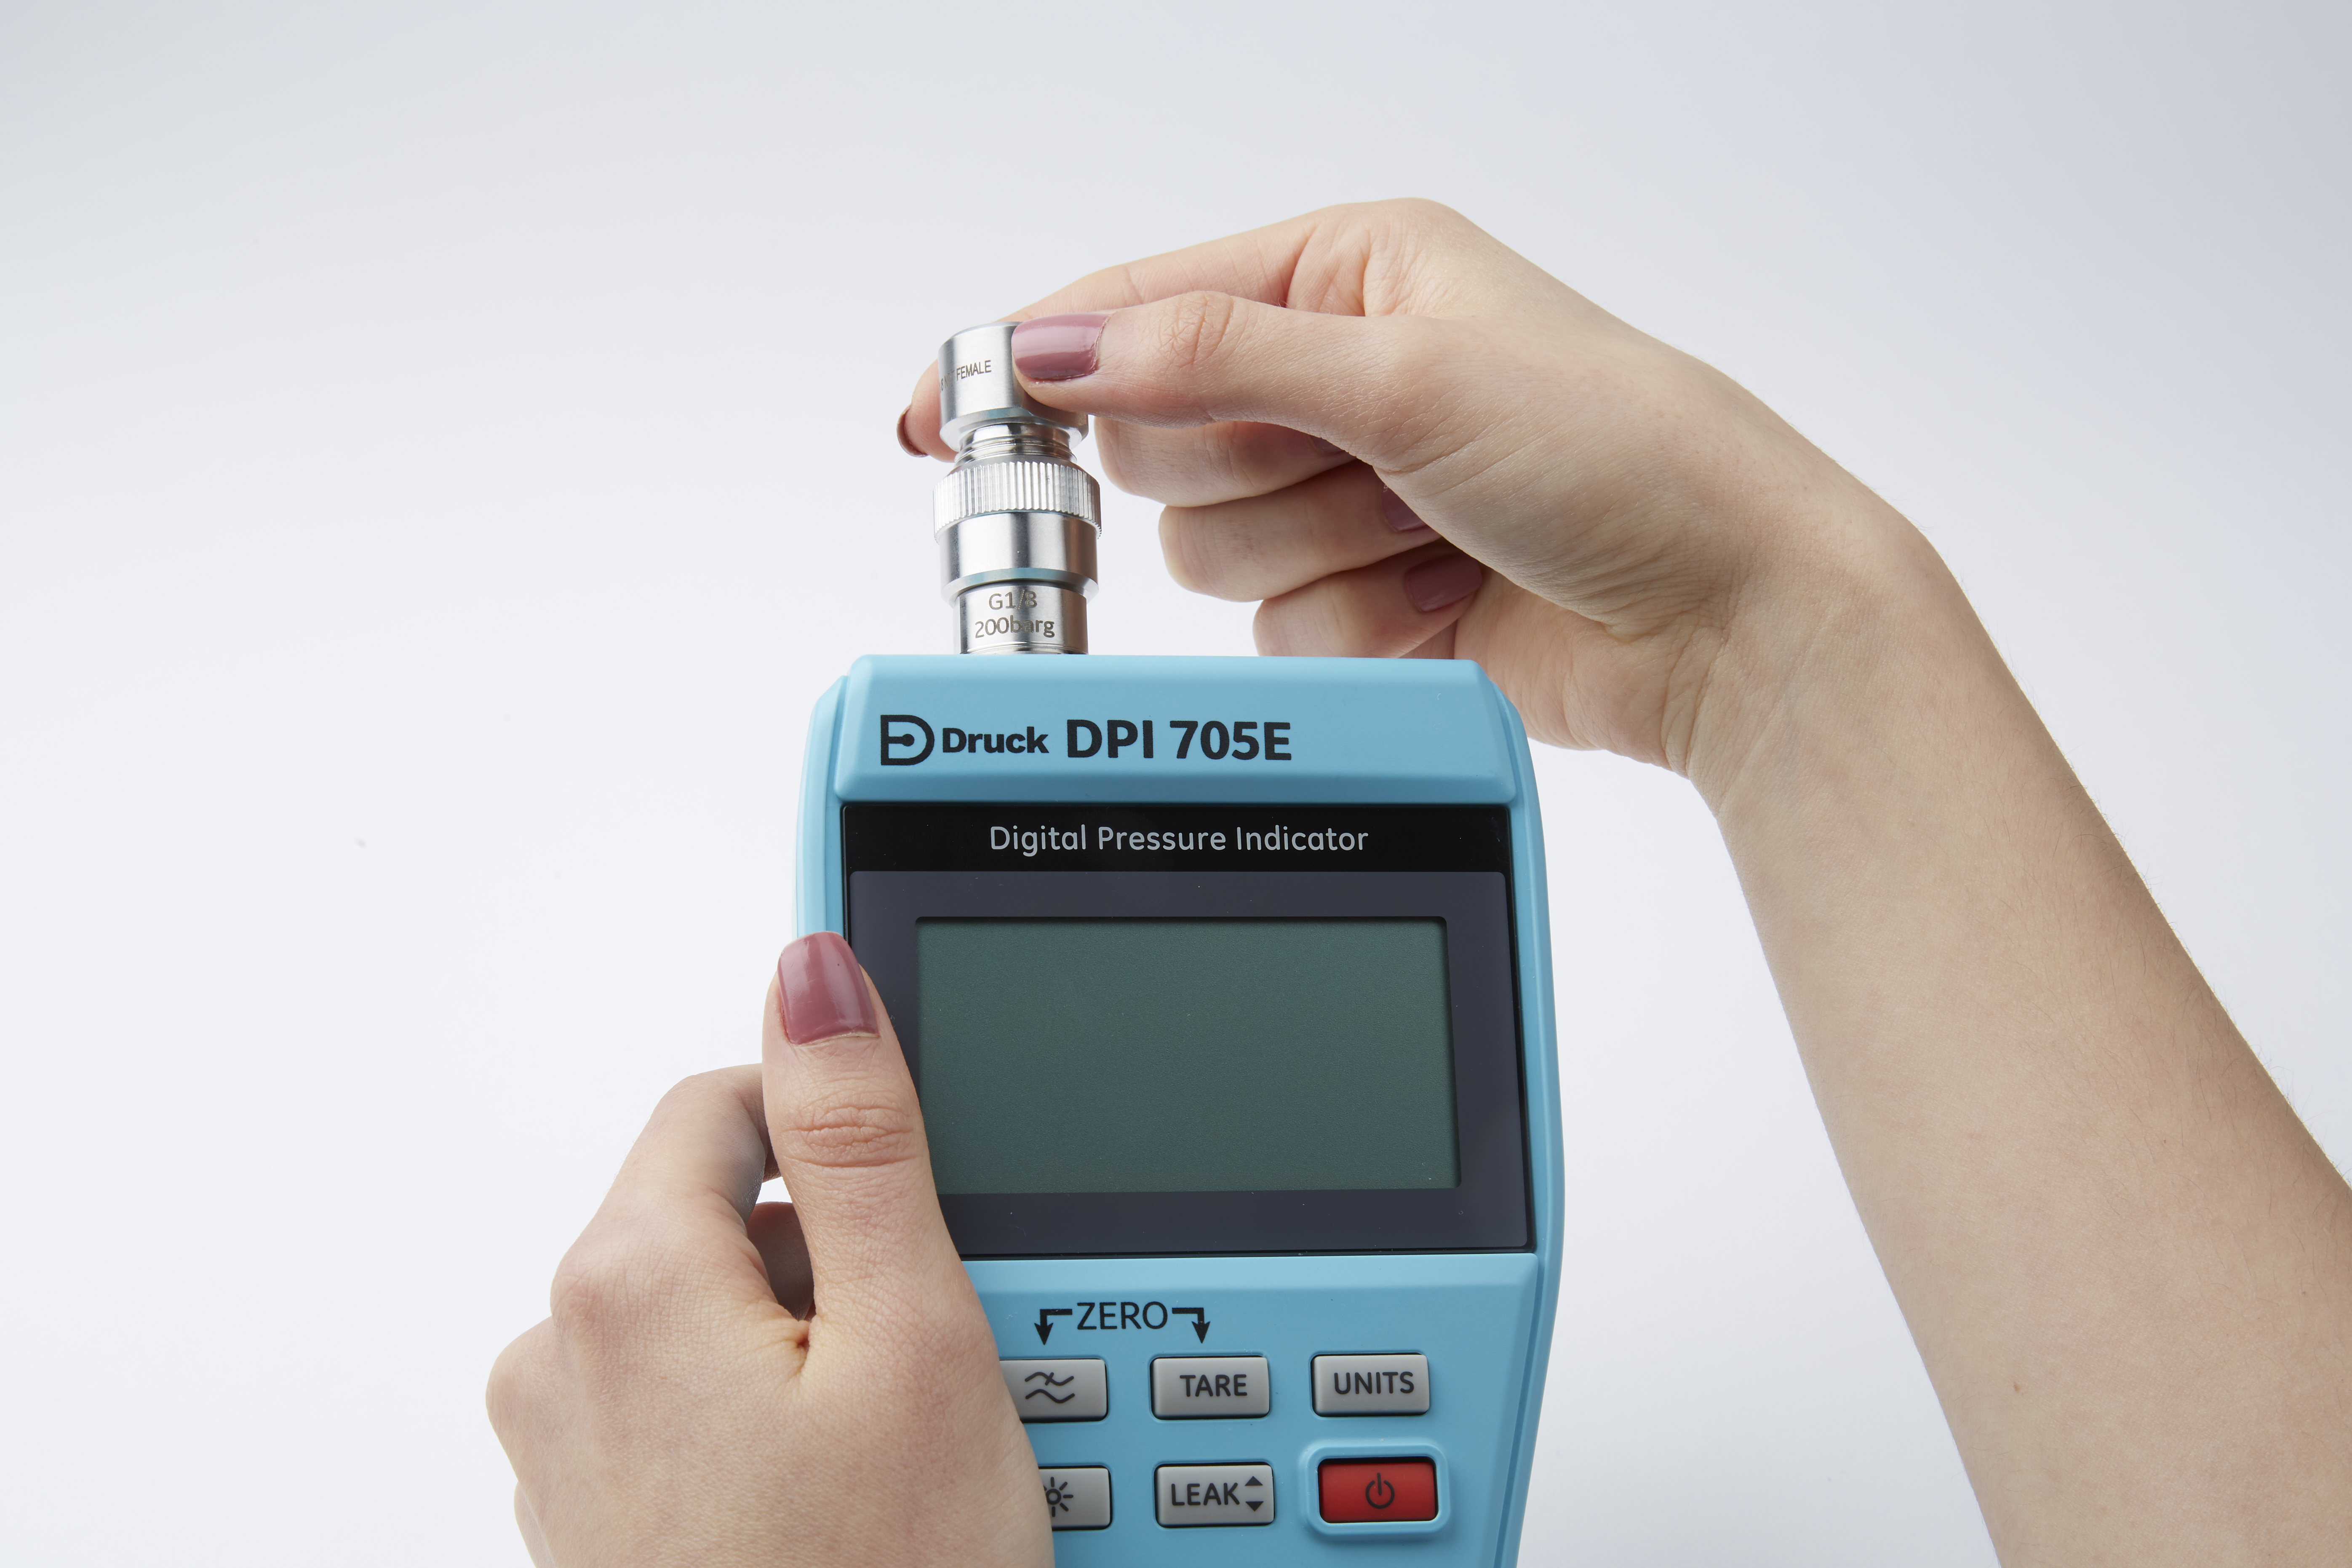 Druck DPI705E Pressure Indicator Image